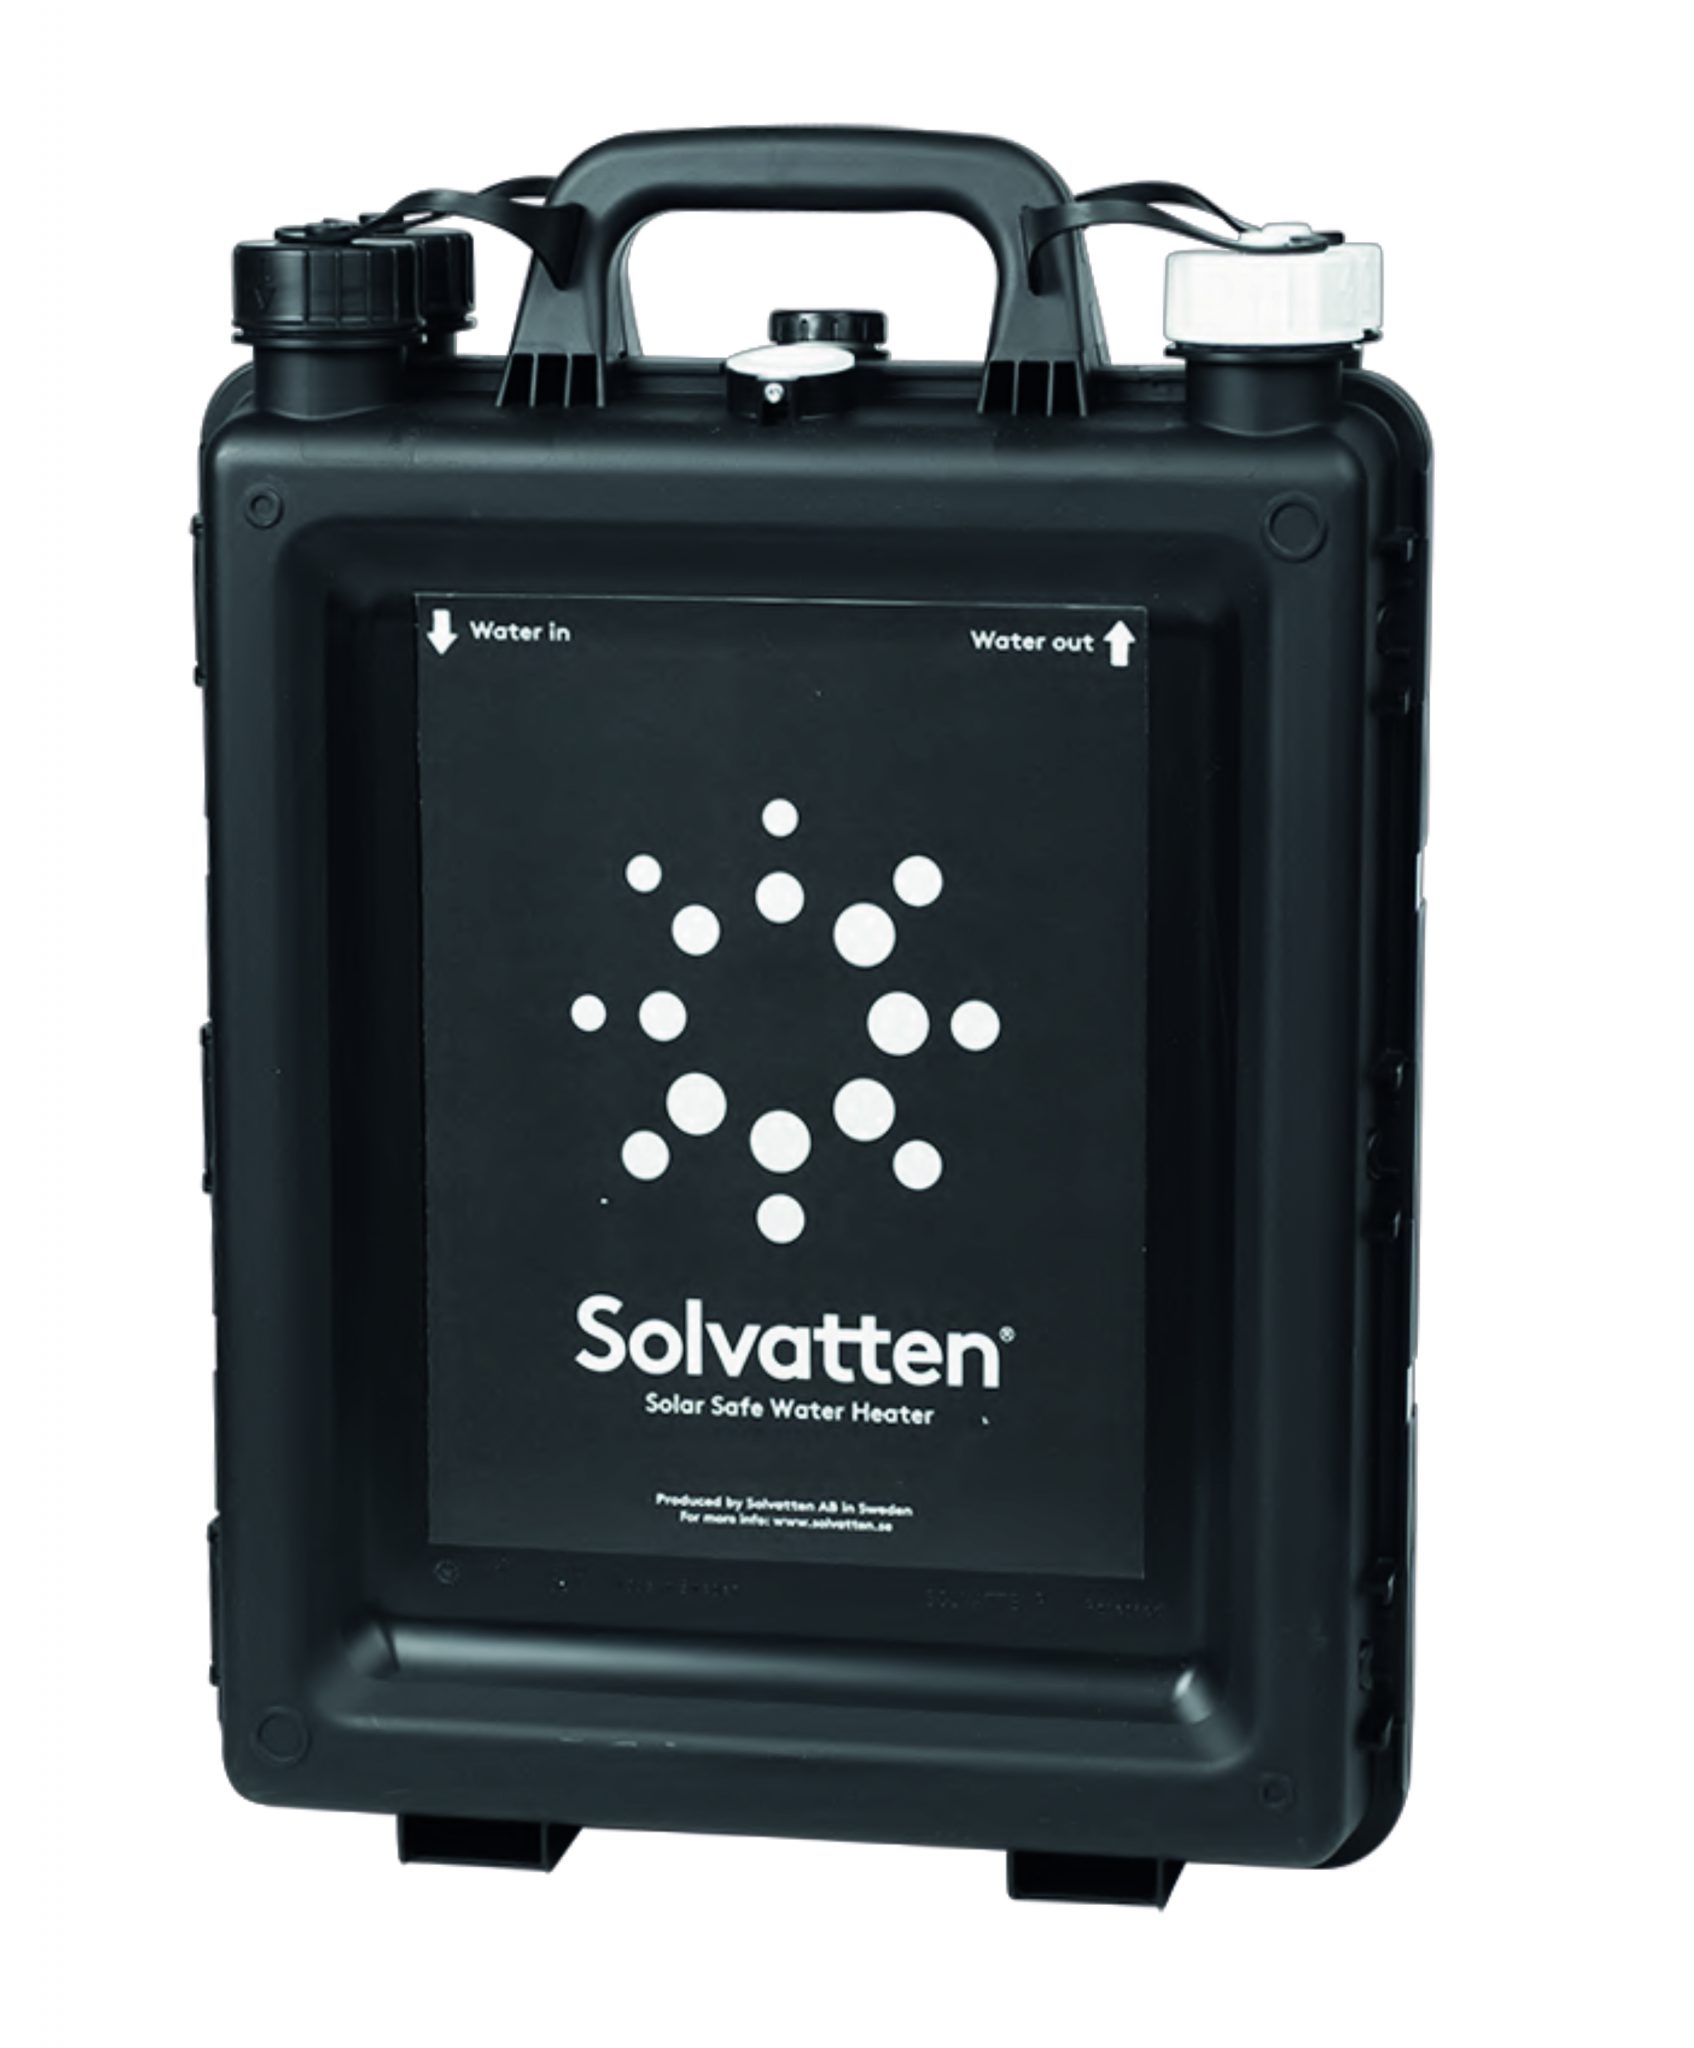 A black box from Solvatten